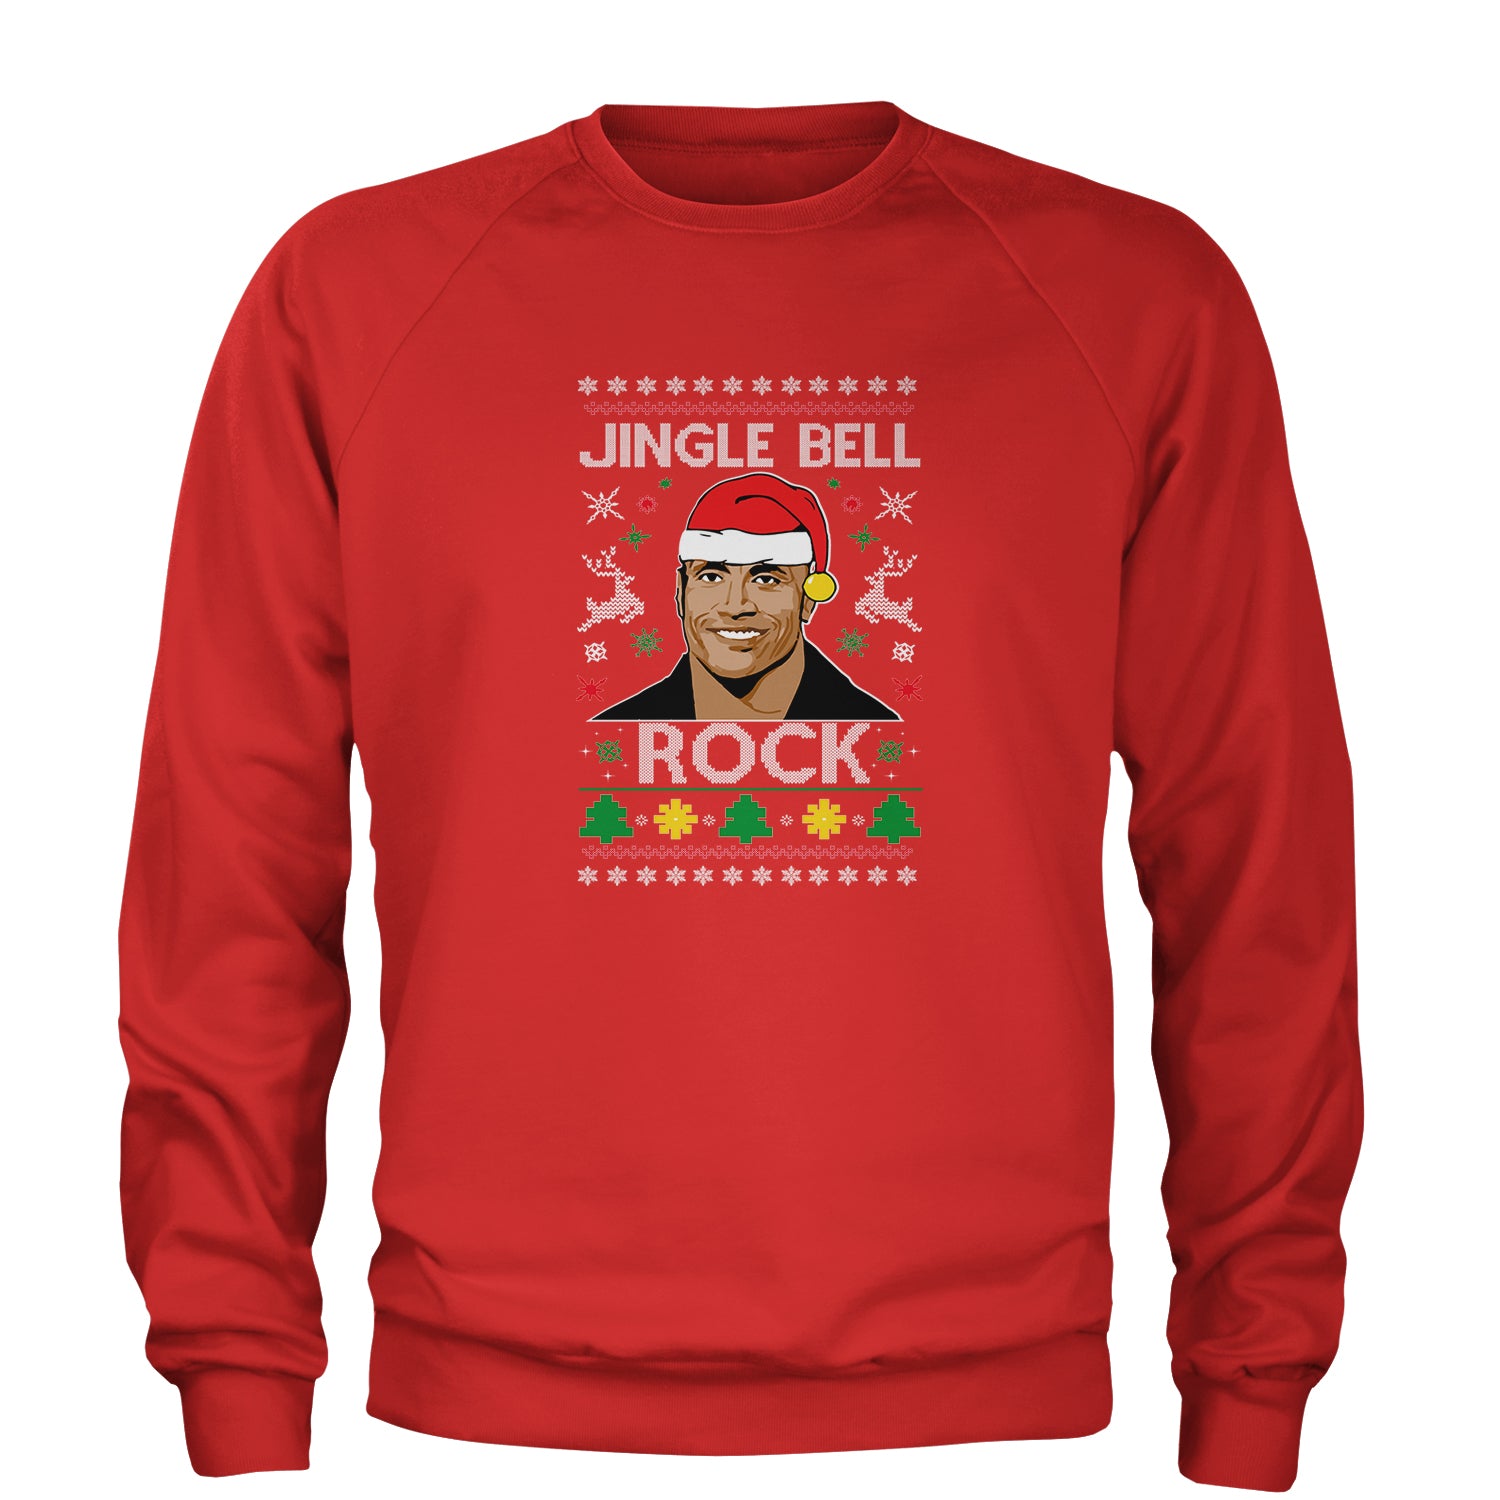 Jingle Bell Rock Ugly Christmas Adult Crewneck Sweatshirt 2018, champ, Christmas, dwayne, johnson, peoples, rock, Sweatshirts, the, Ugly by Expression Tees